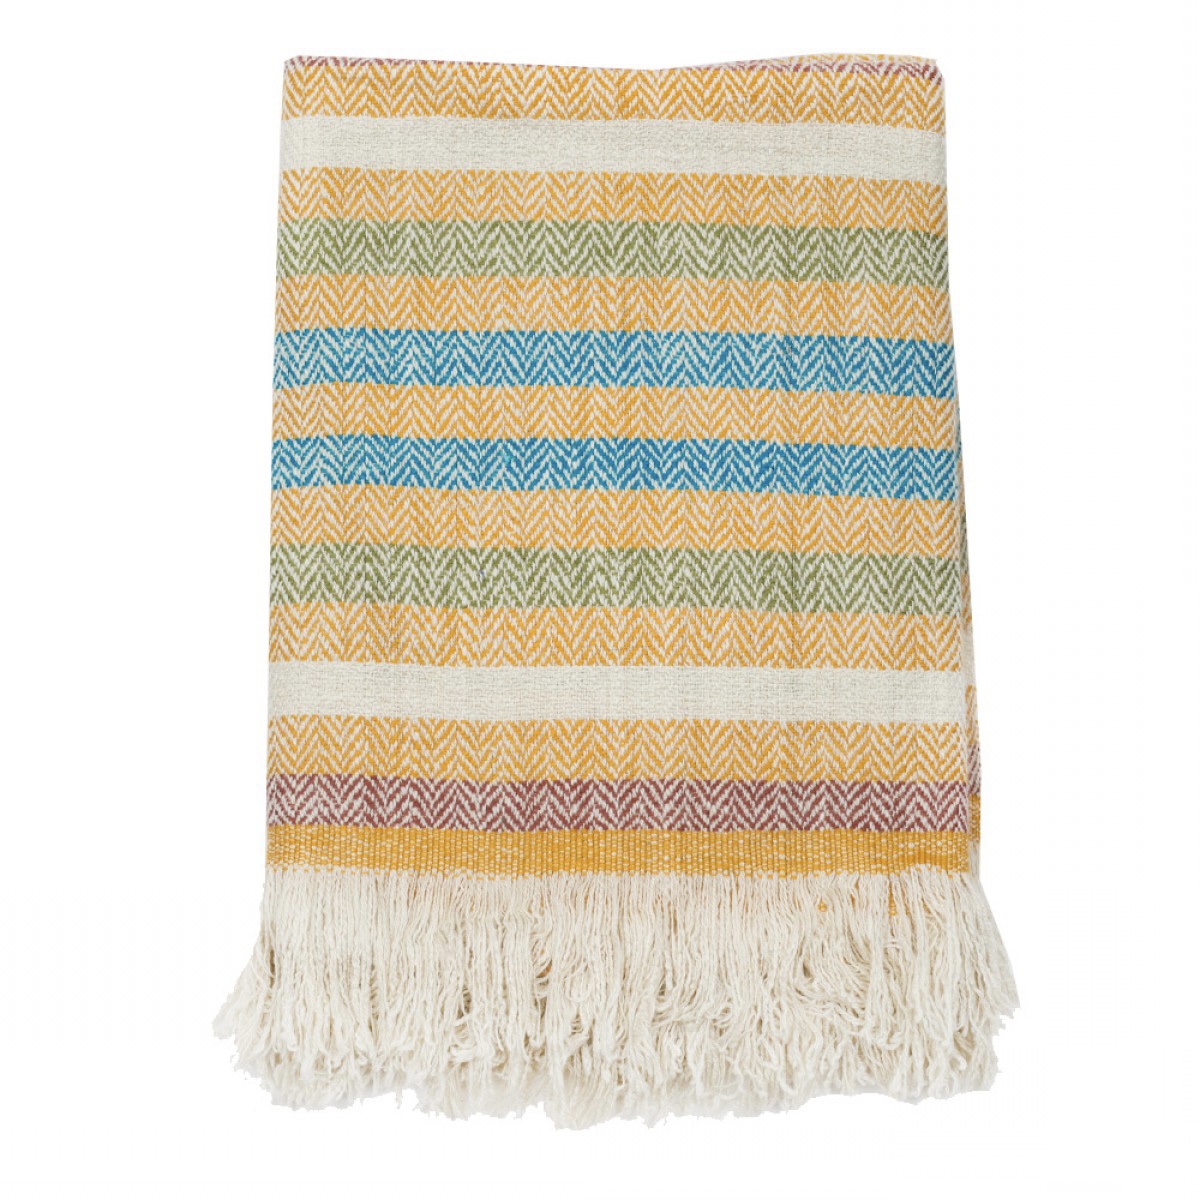 Teal & Yellow Stripes Herringbone Cashmere Blanket (Made to Order)